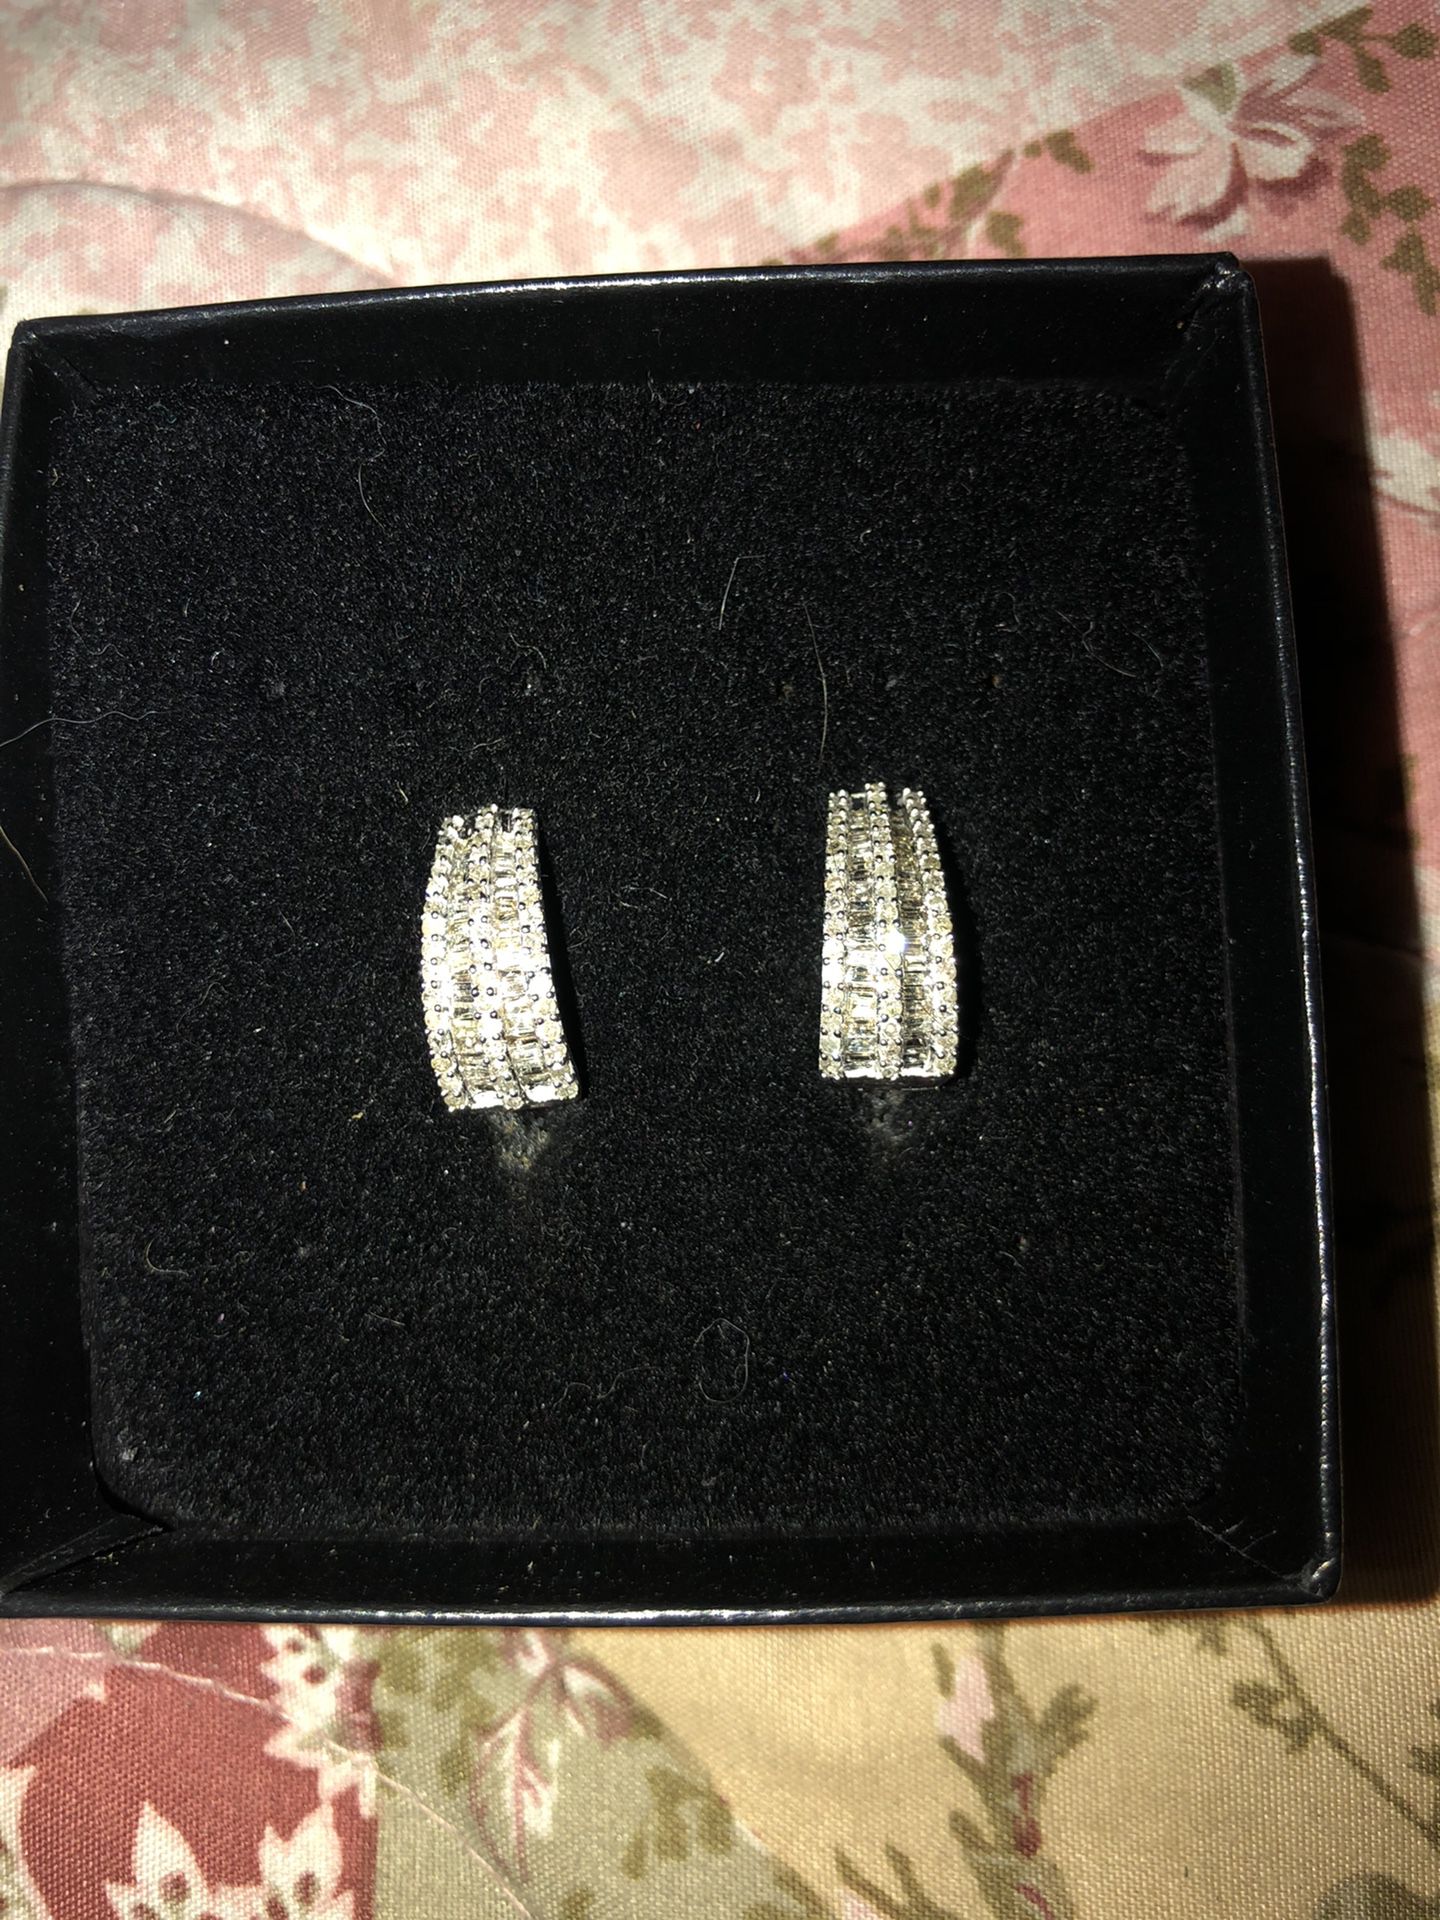 1 Ct white diamond earrings hoops